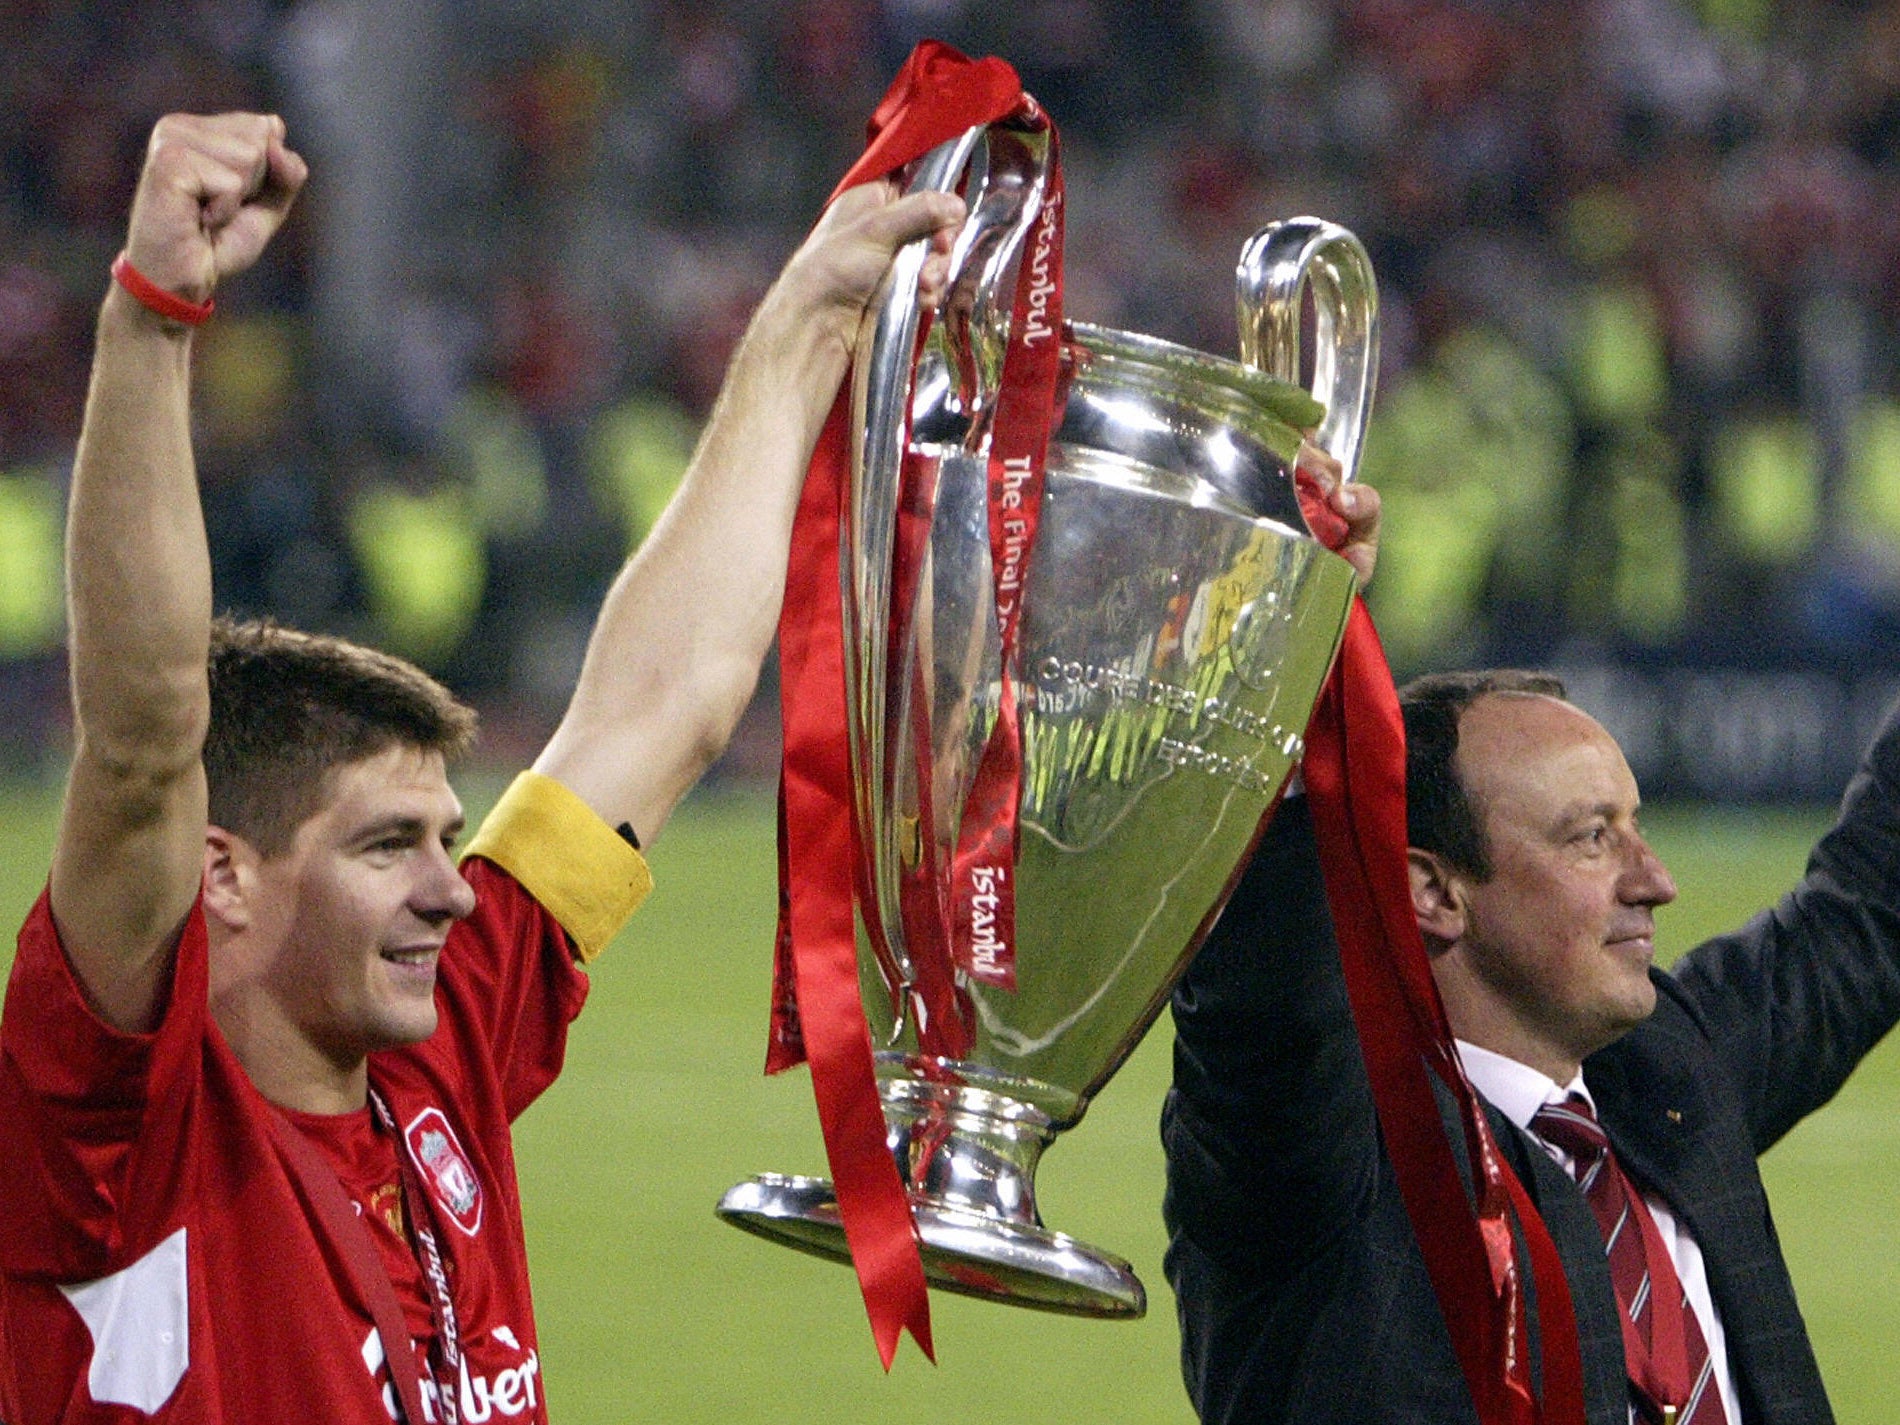 Steven Gerrard and Rafa Benitez hold the Champions League trophy aloft following their triumphant success in 2005